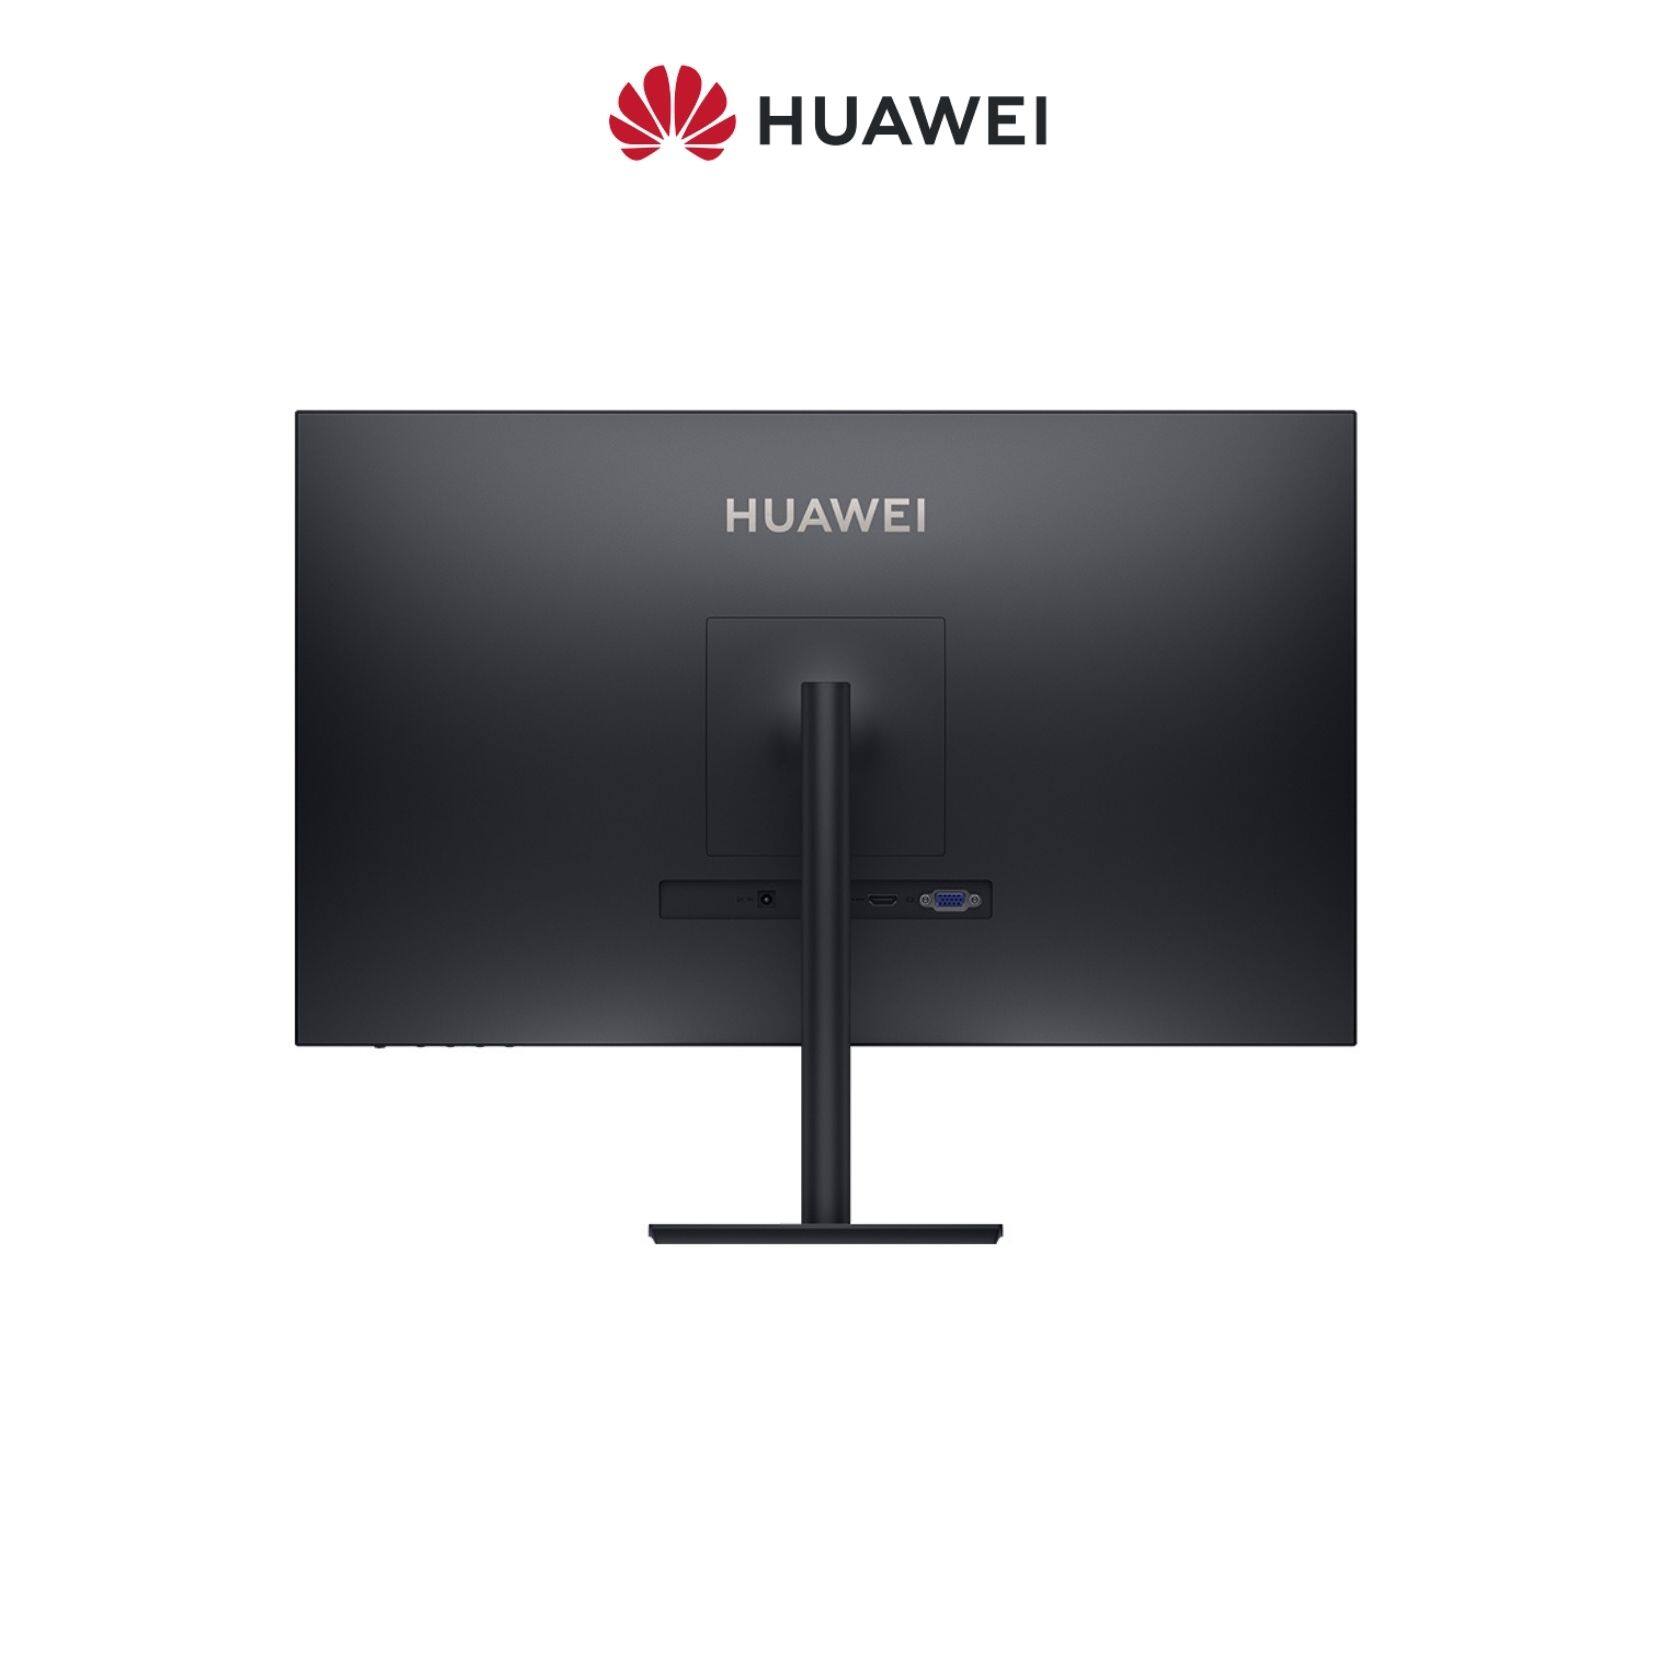 HUAWEI Display AD80 23.8 Inch Monitor - 1080P FullView Display